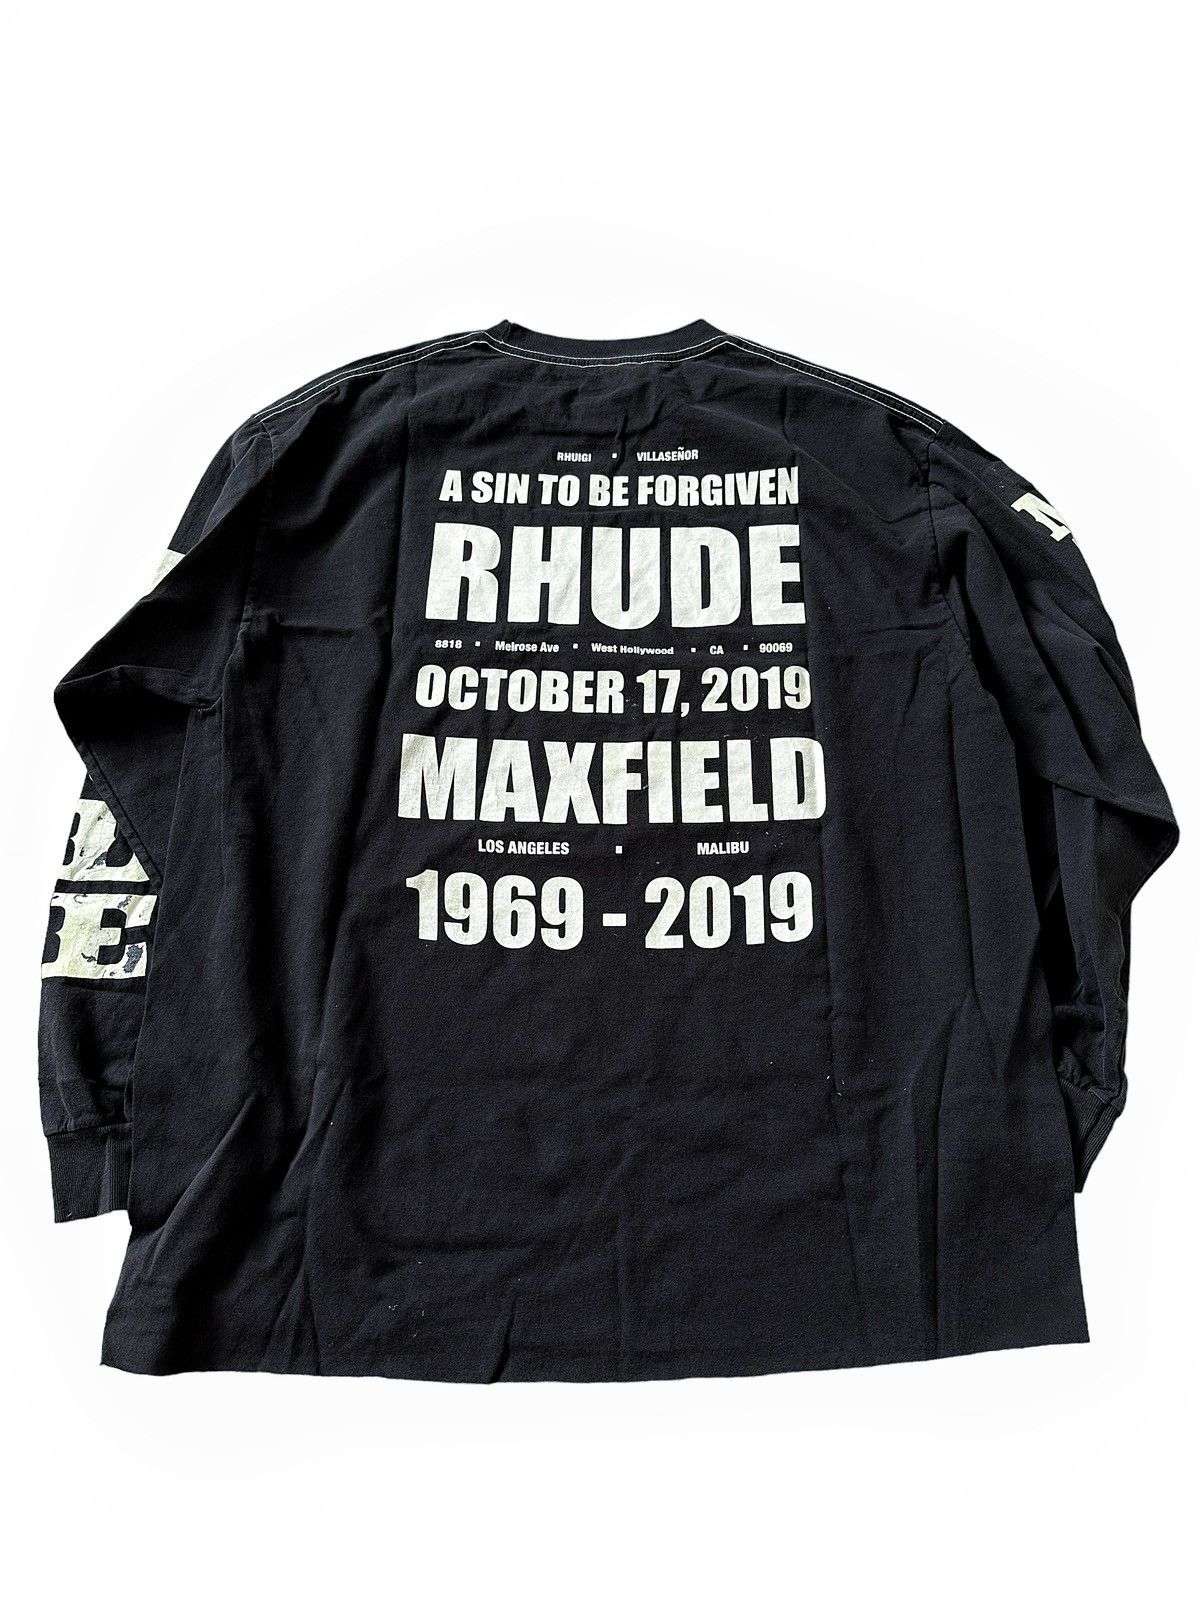 Rhude Maxfield | Grailed